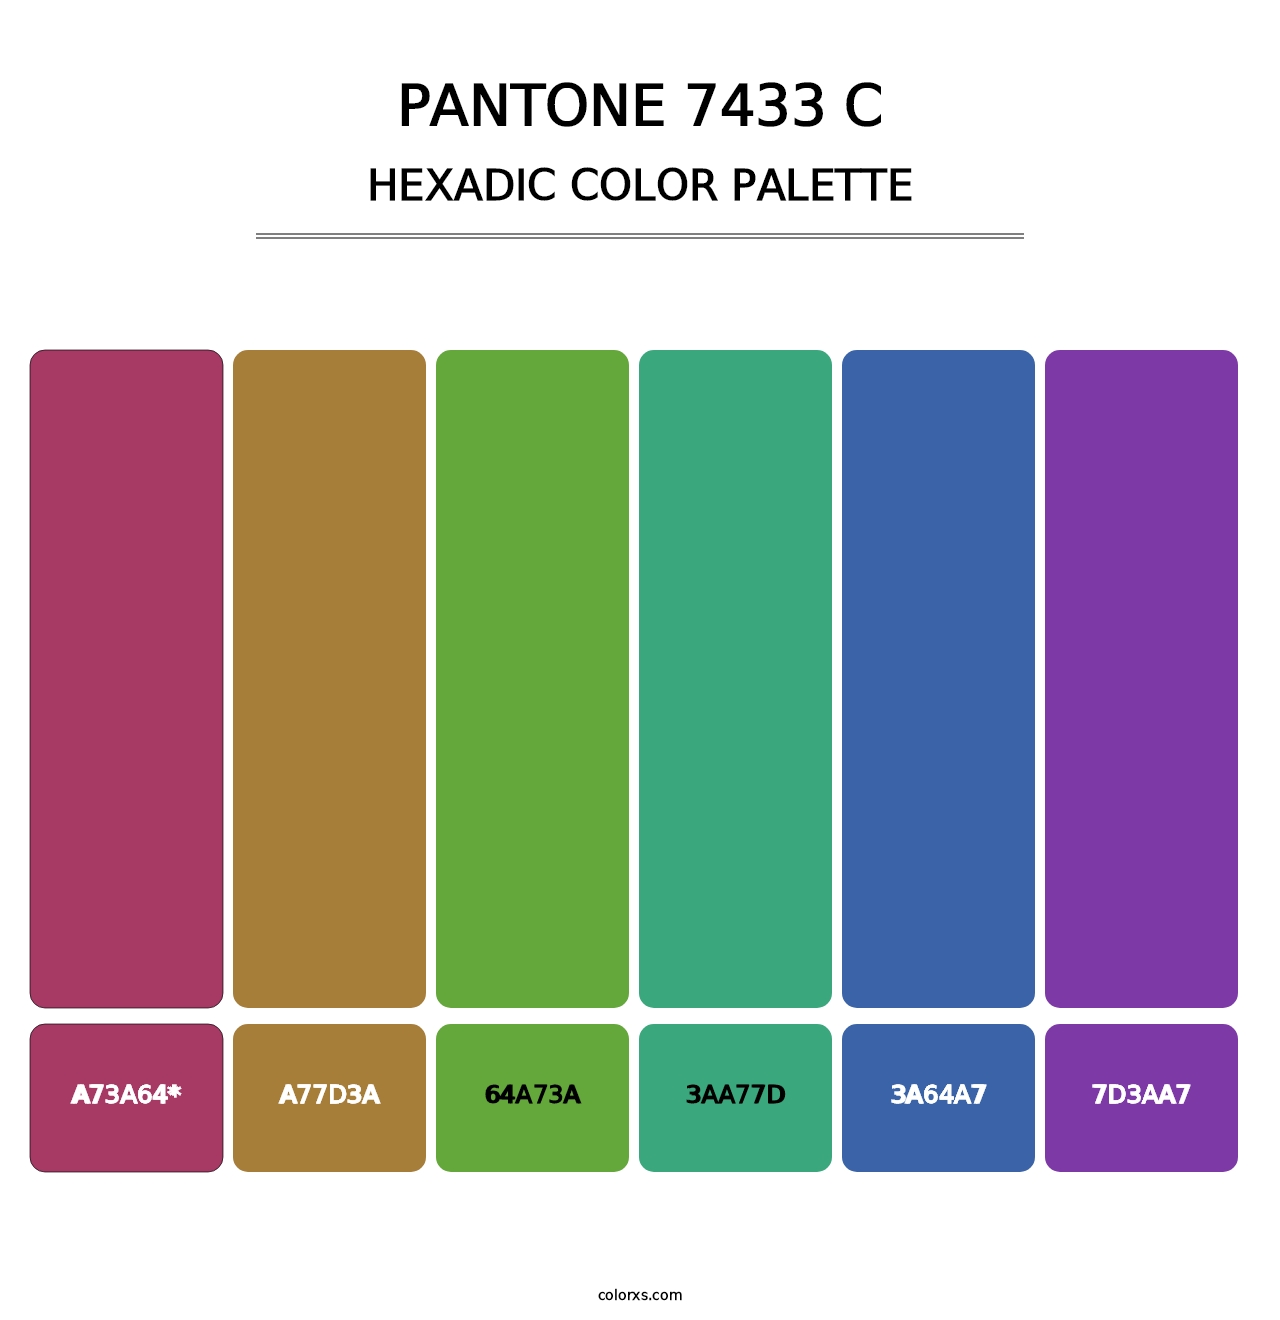 PANTONE 7433 C - Hexadic Color Palette